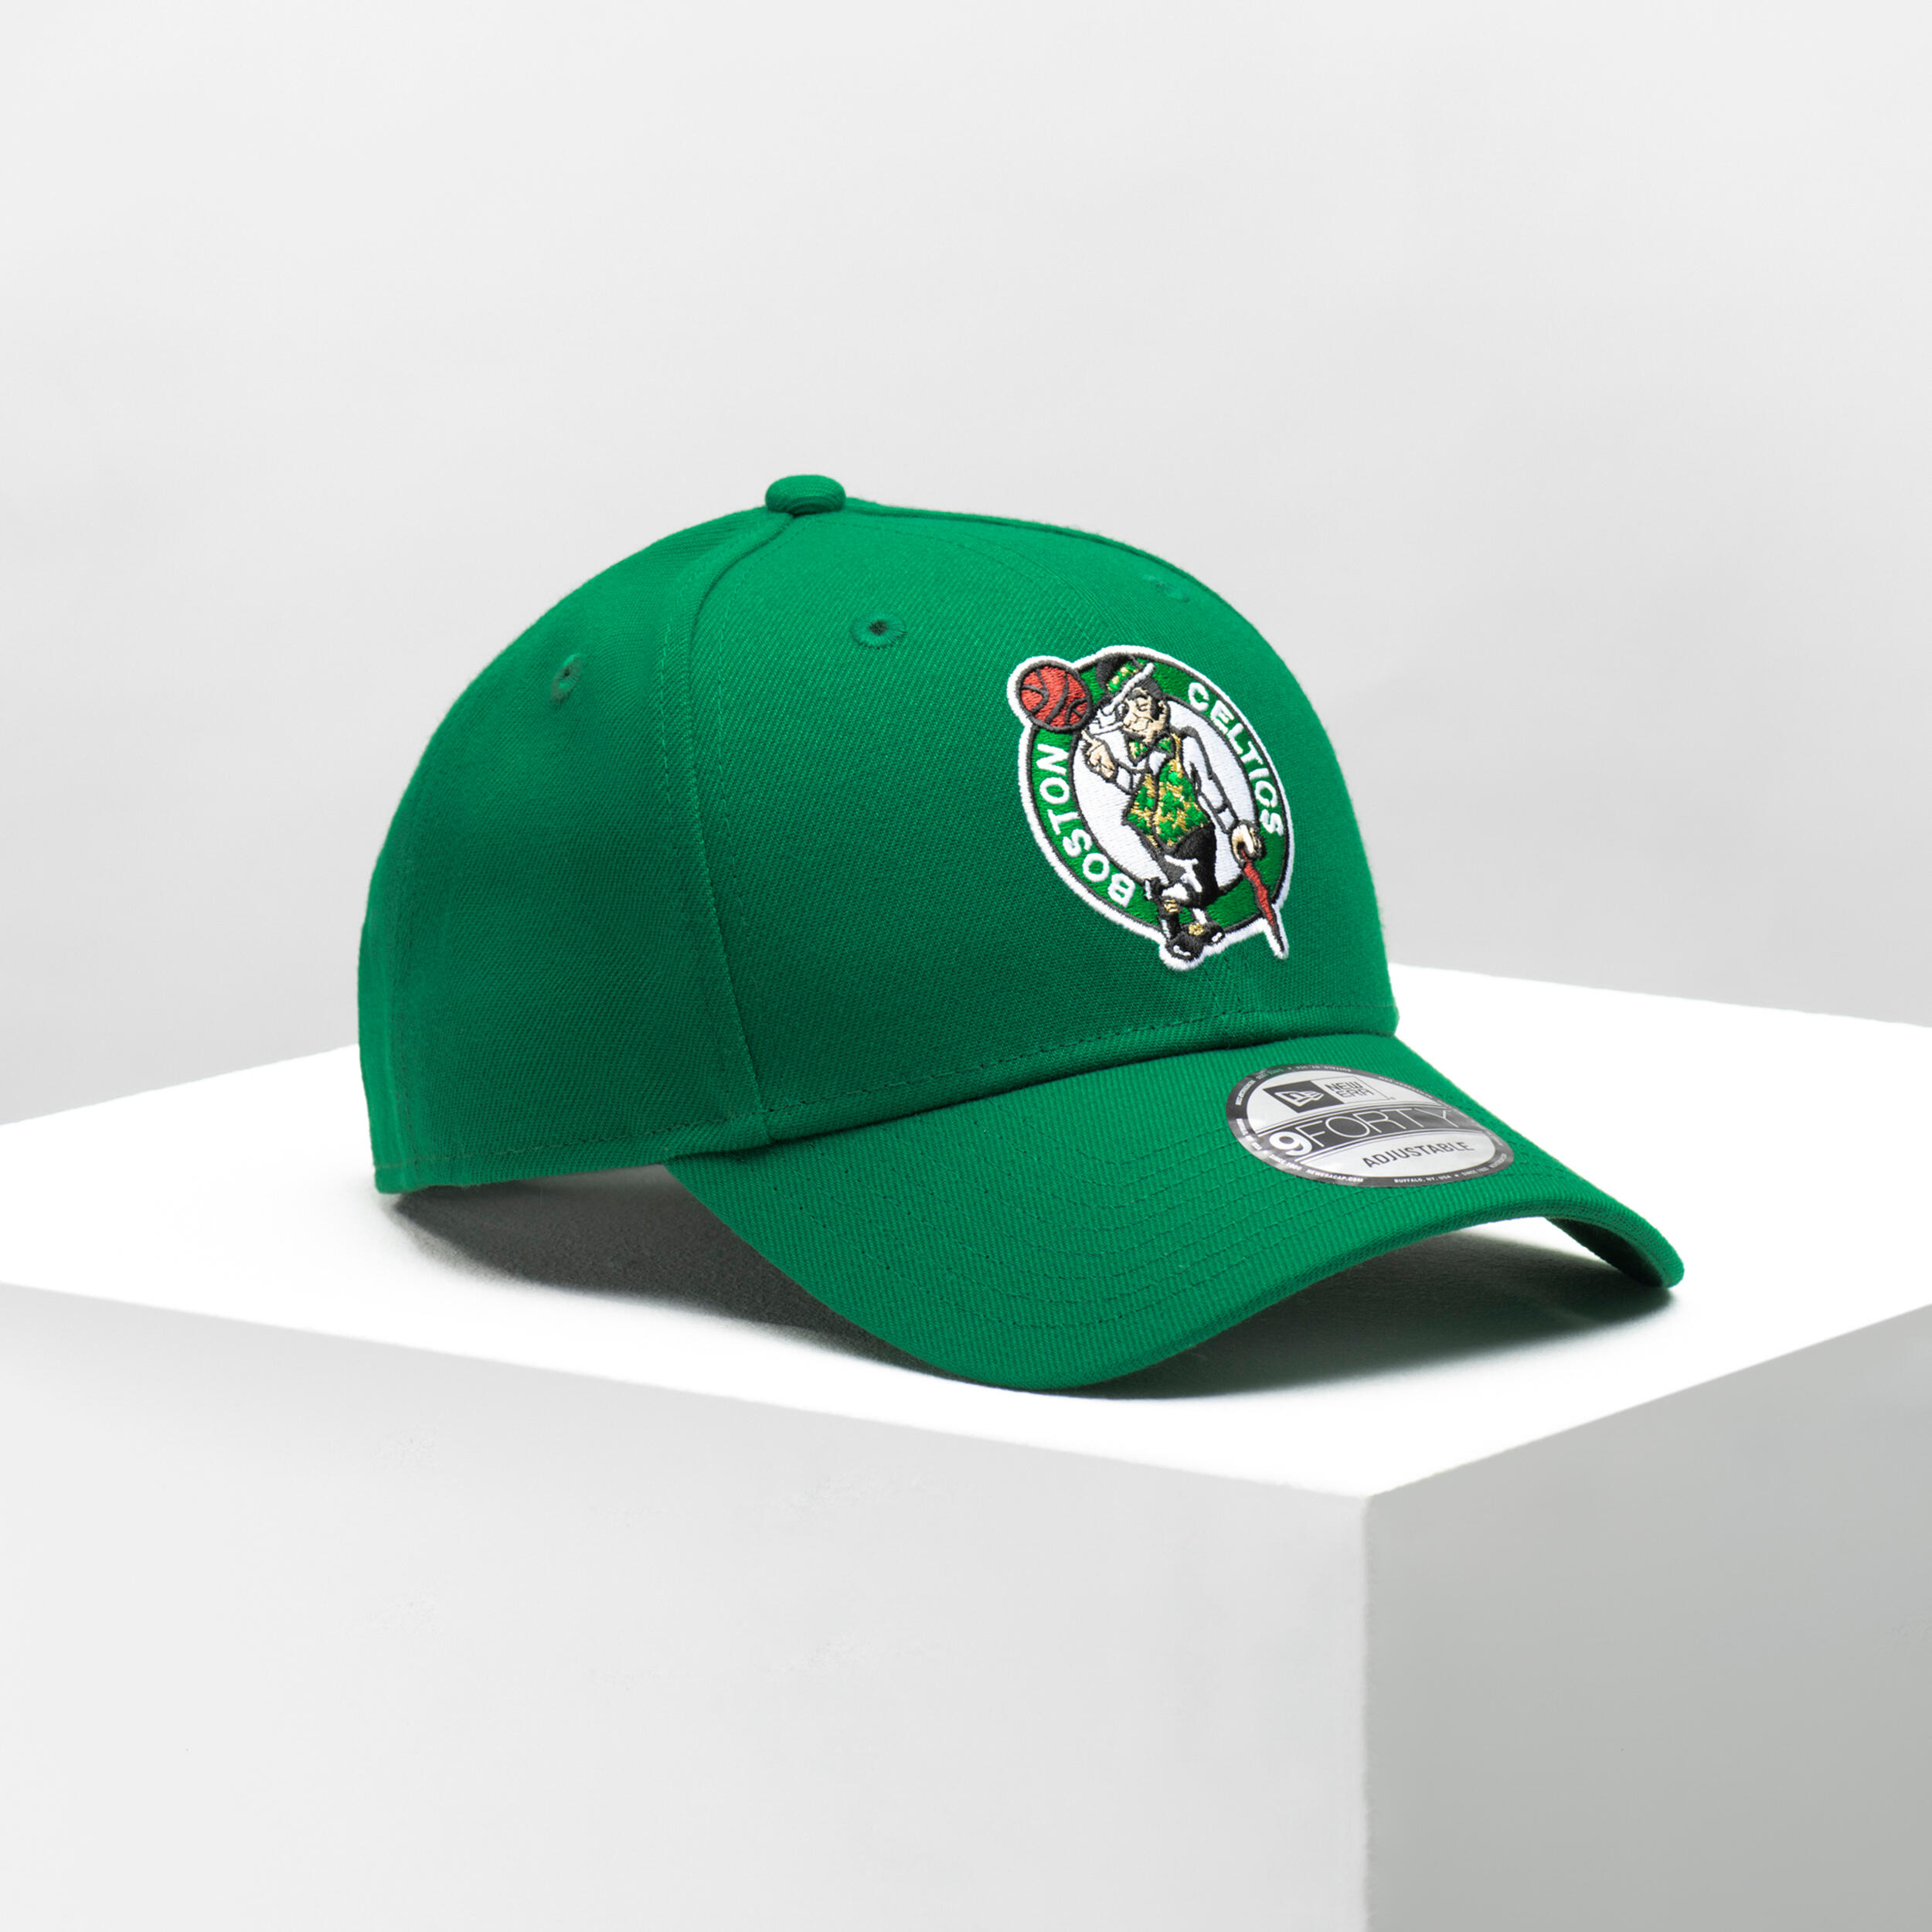 Men's/Women's Basketball Cap NBA - Boston Celtics/Green 2/8